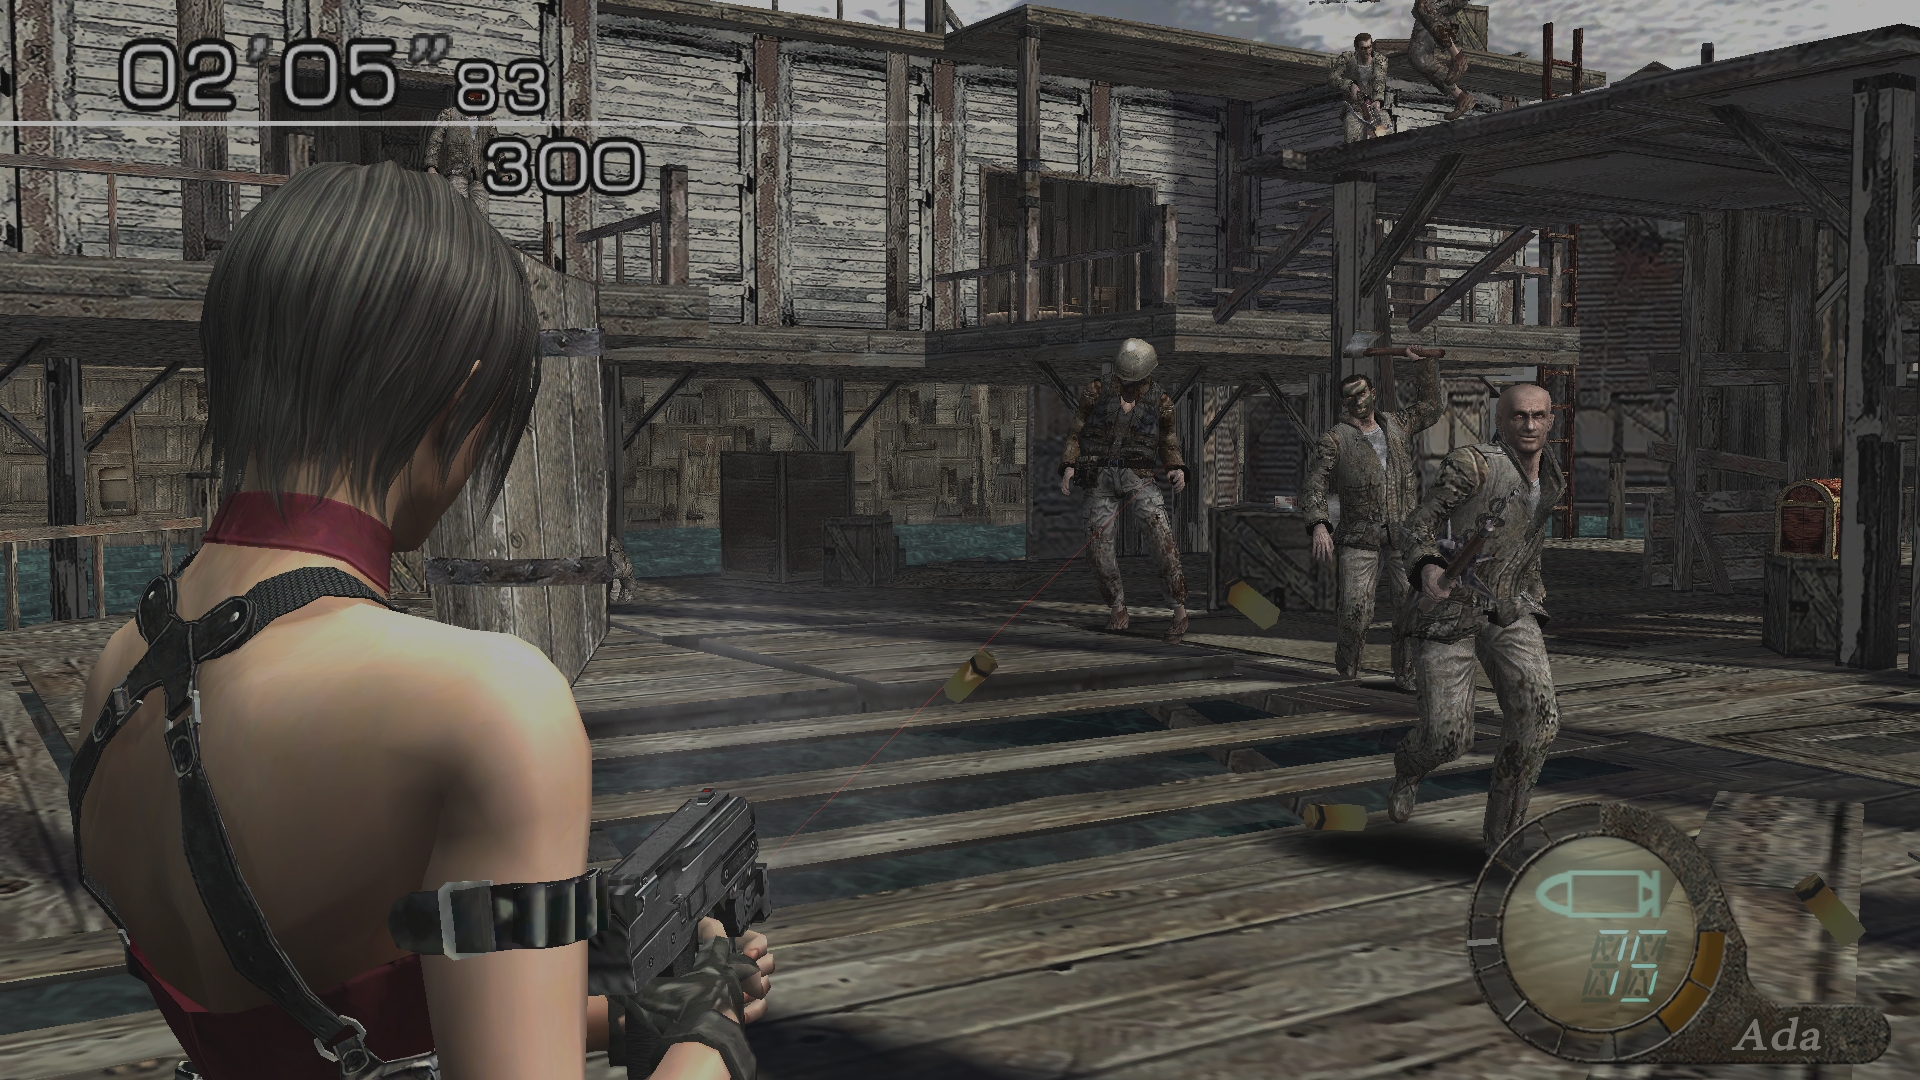 Media asset in full size related to 3dfxzone.it news item entitled as follows: Capcom annuncia la data di lancio di Resident Evil 4 per PS4 e Xbox One | Image Name: news24563_Resident-Evil-4-Screenshot_1.jpg